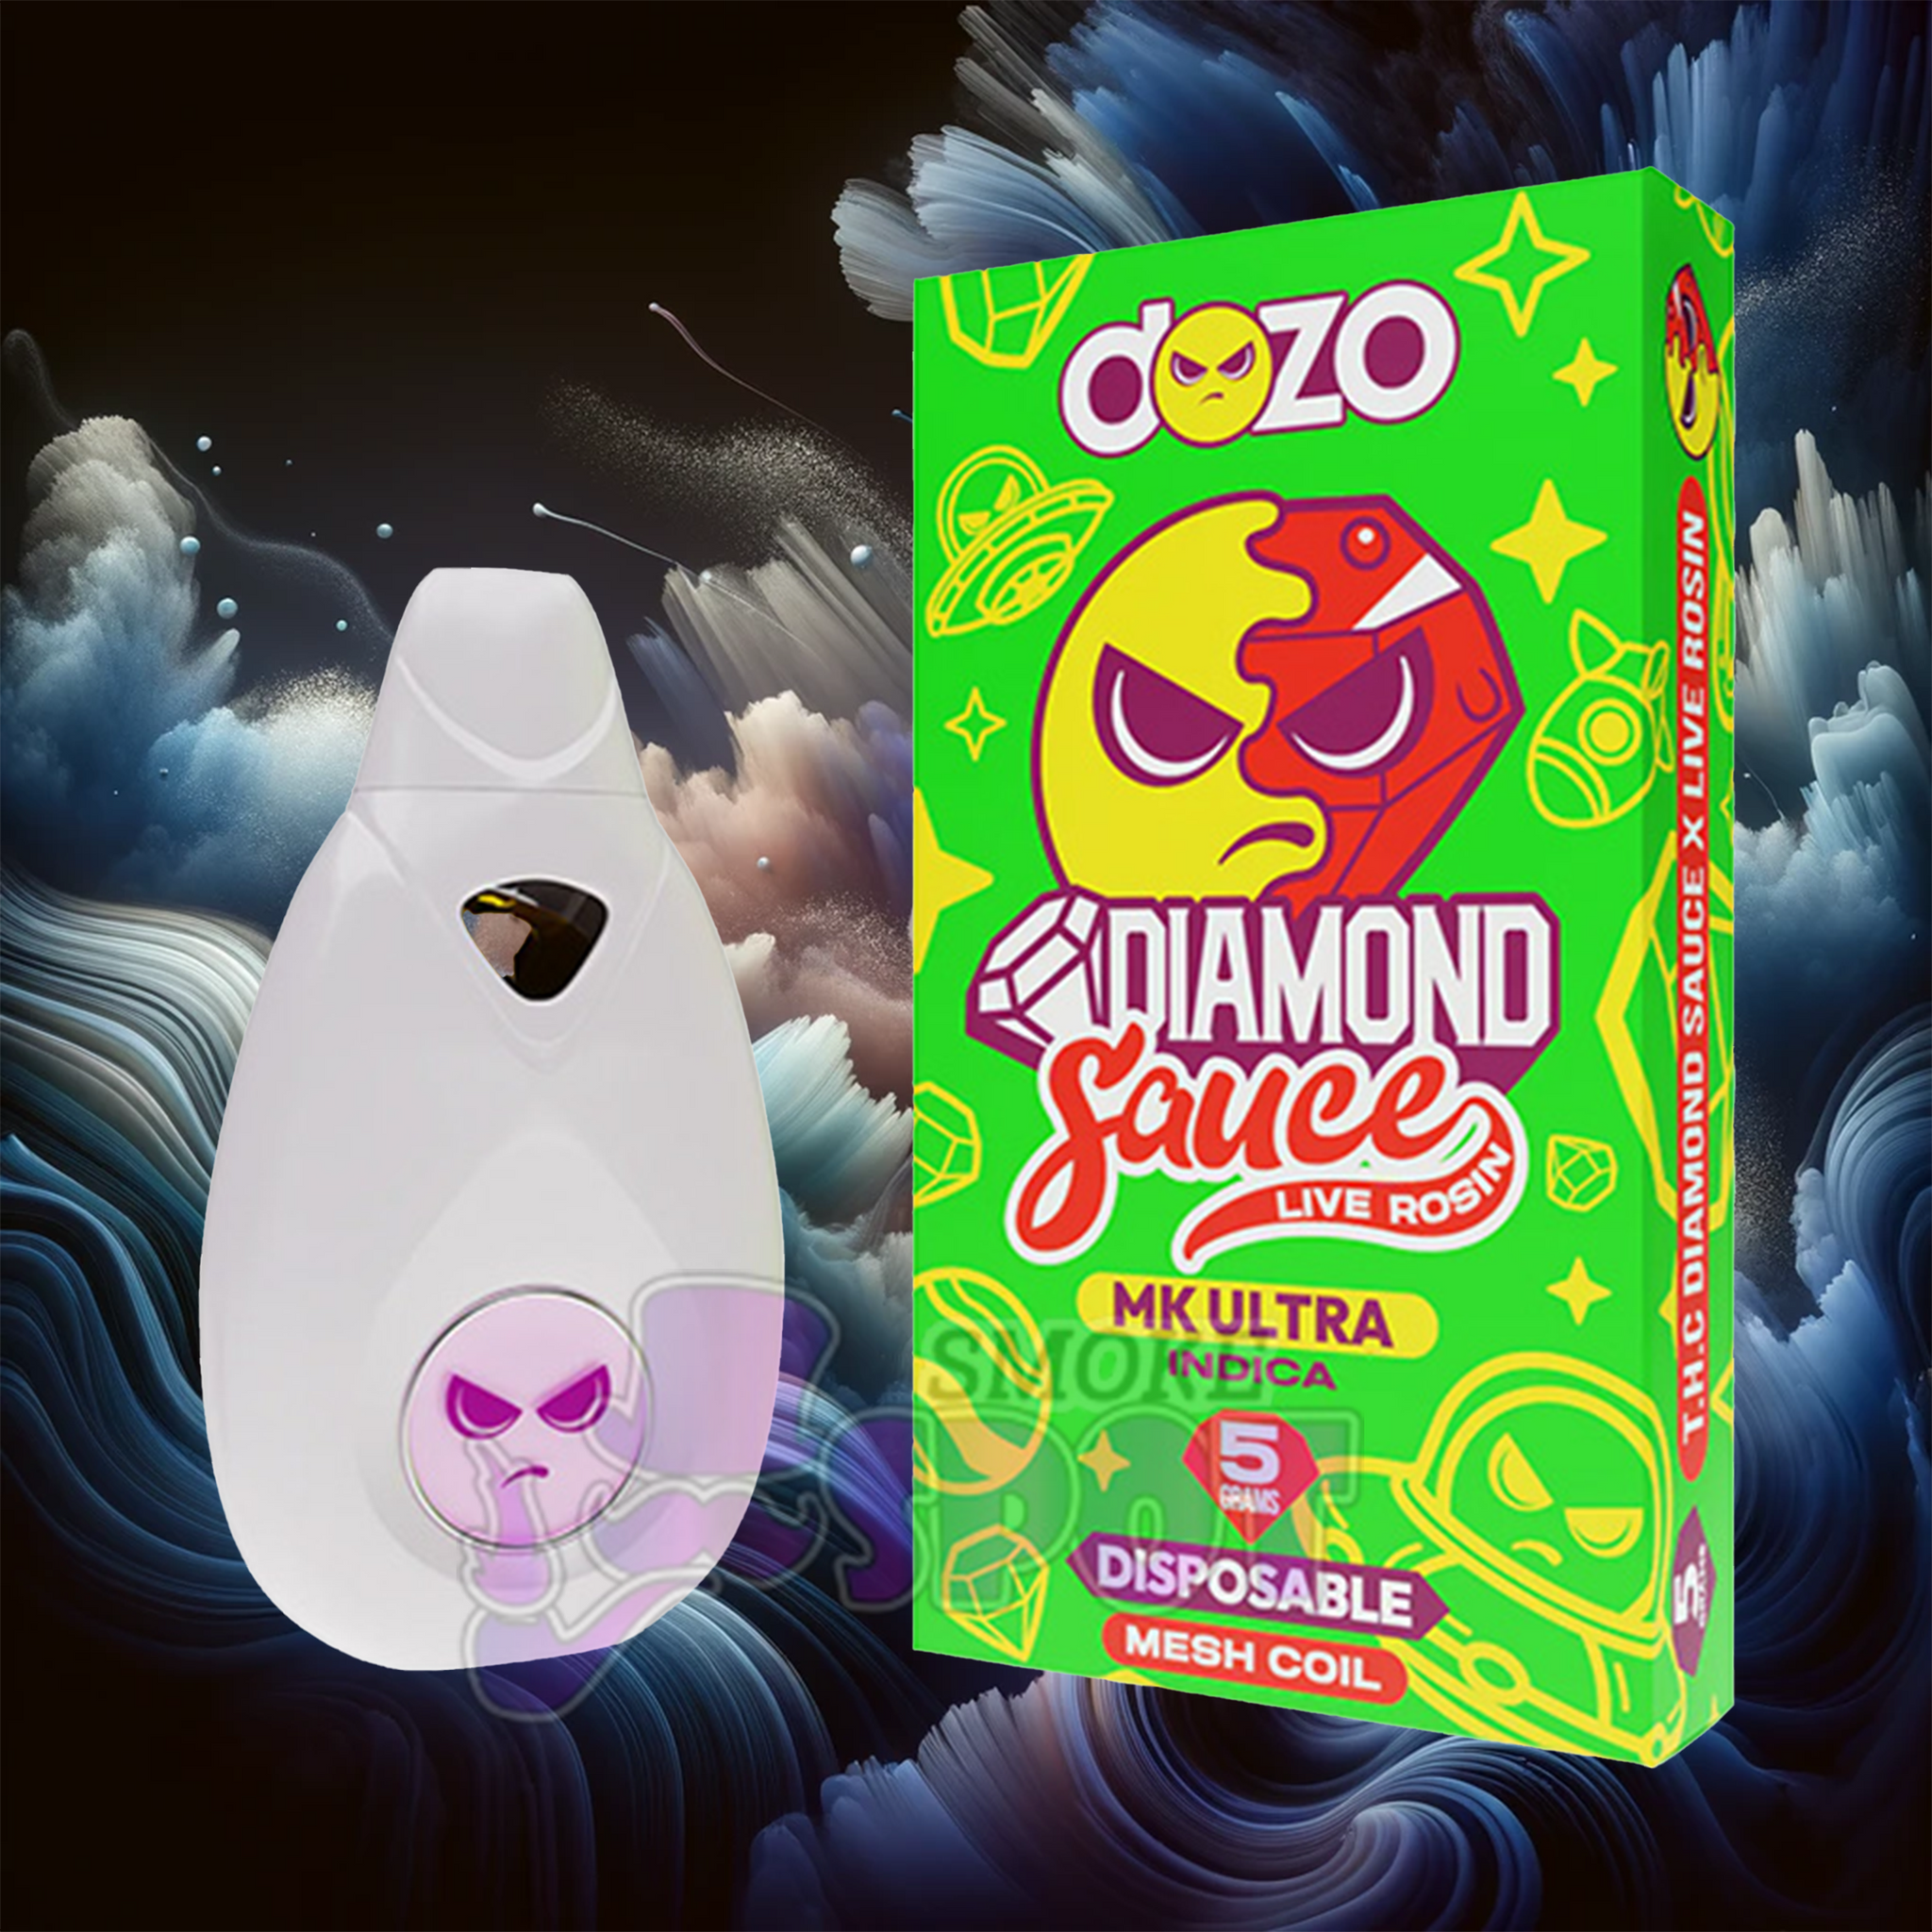 dozo diamond sauce 5 grams - mk ultra indica